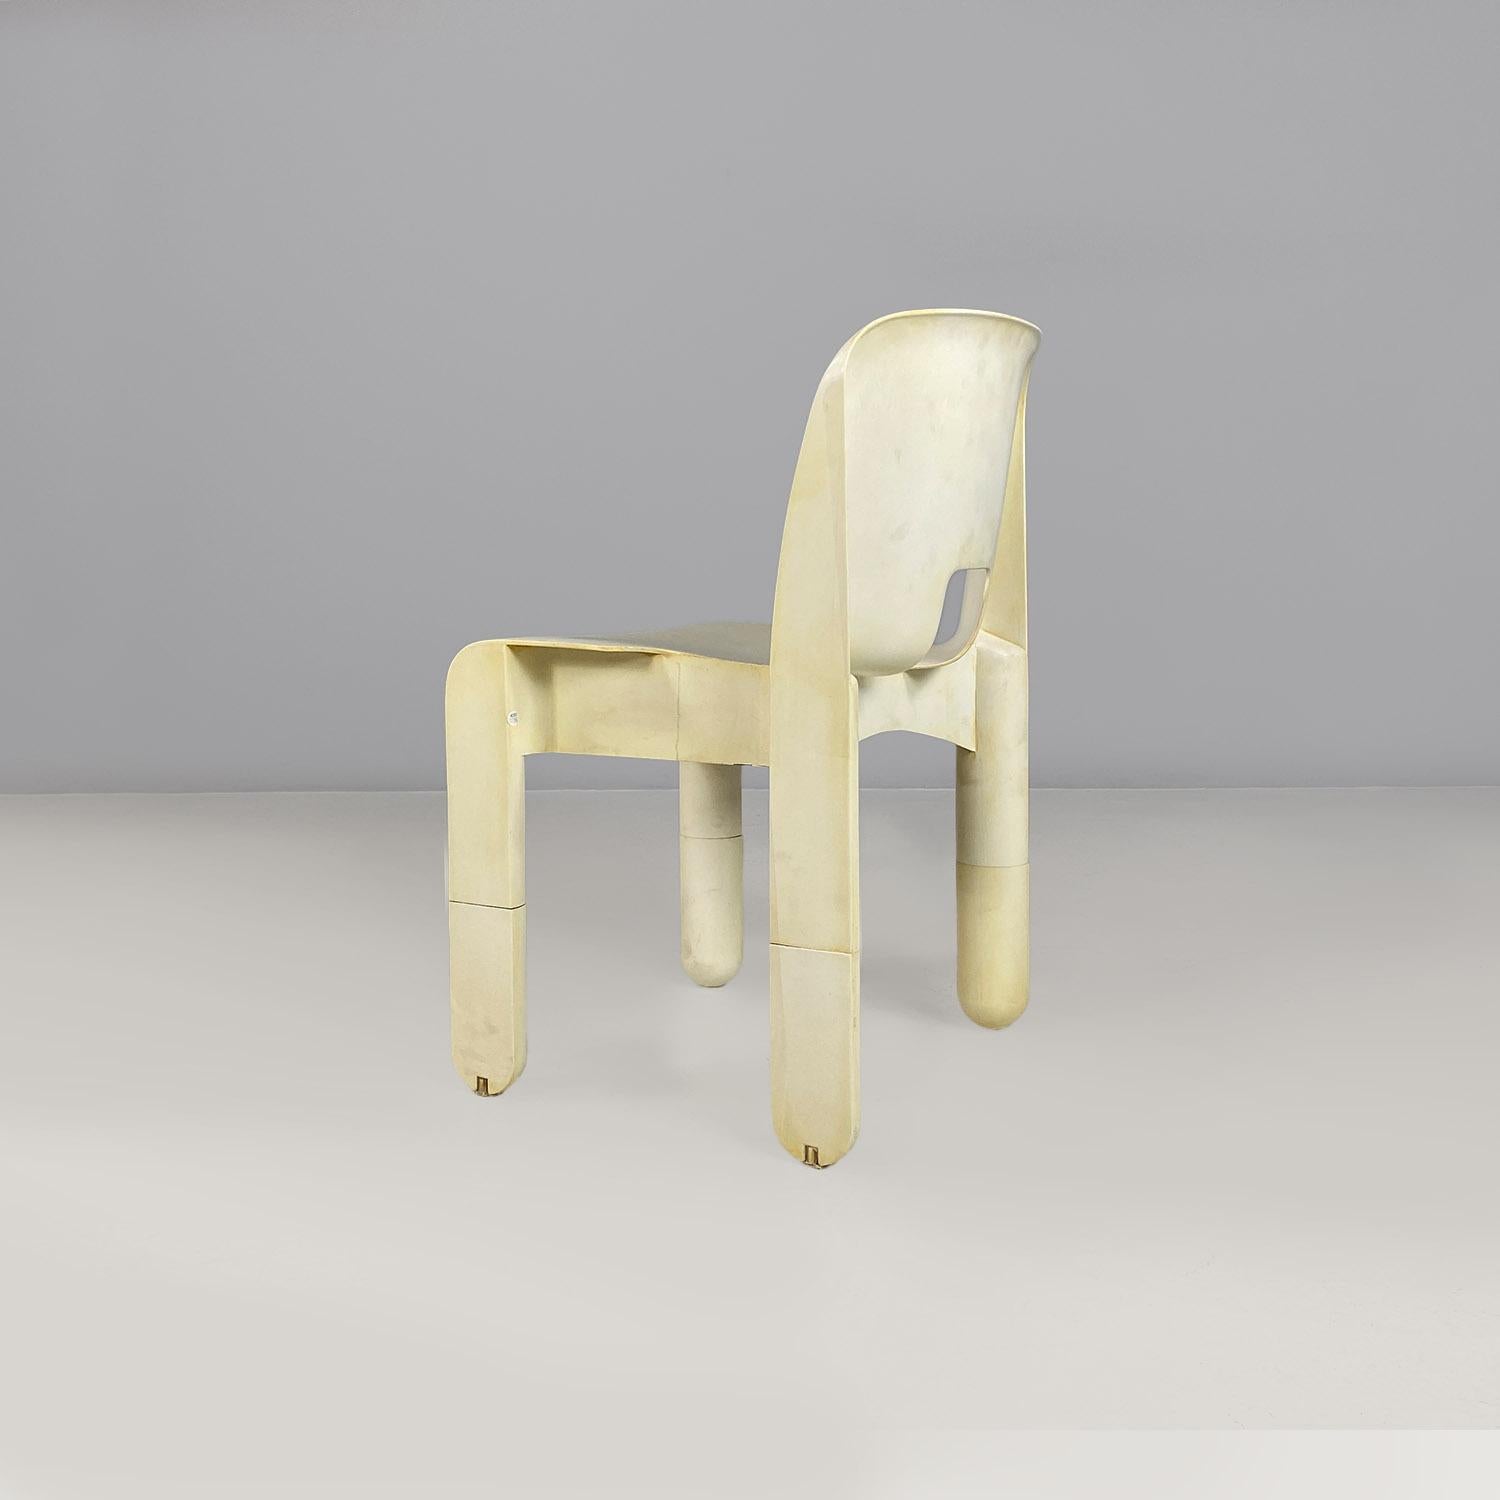 Italian modern white plastic 860 Universale Chairs, Joe Colombo, Kartell, 1970s For Sale 1